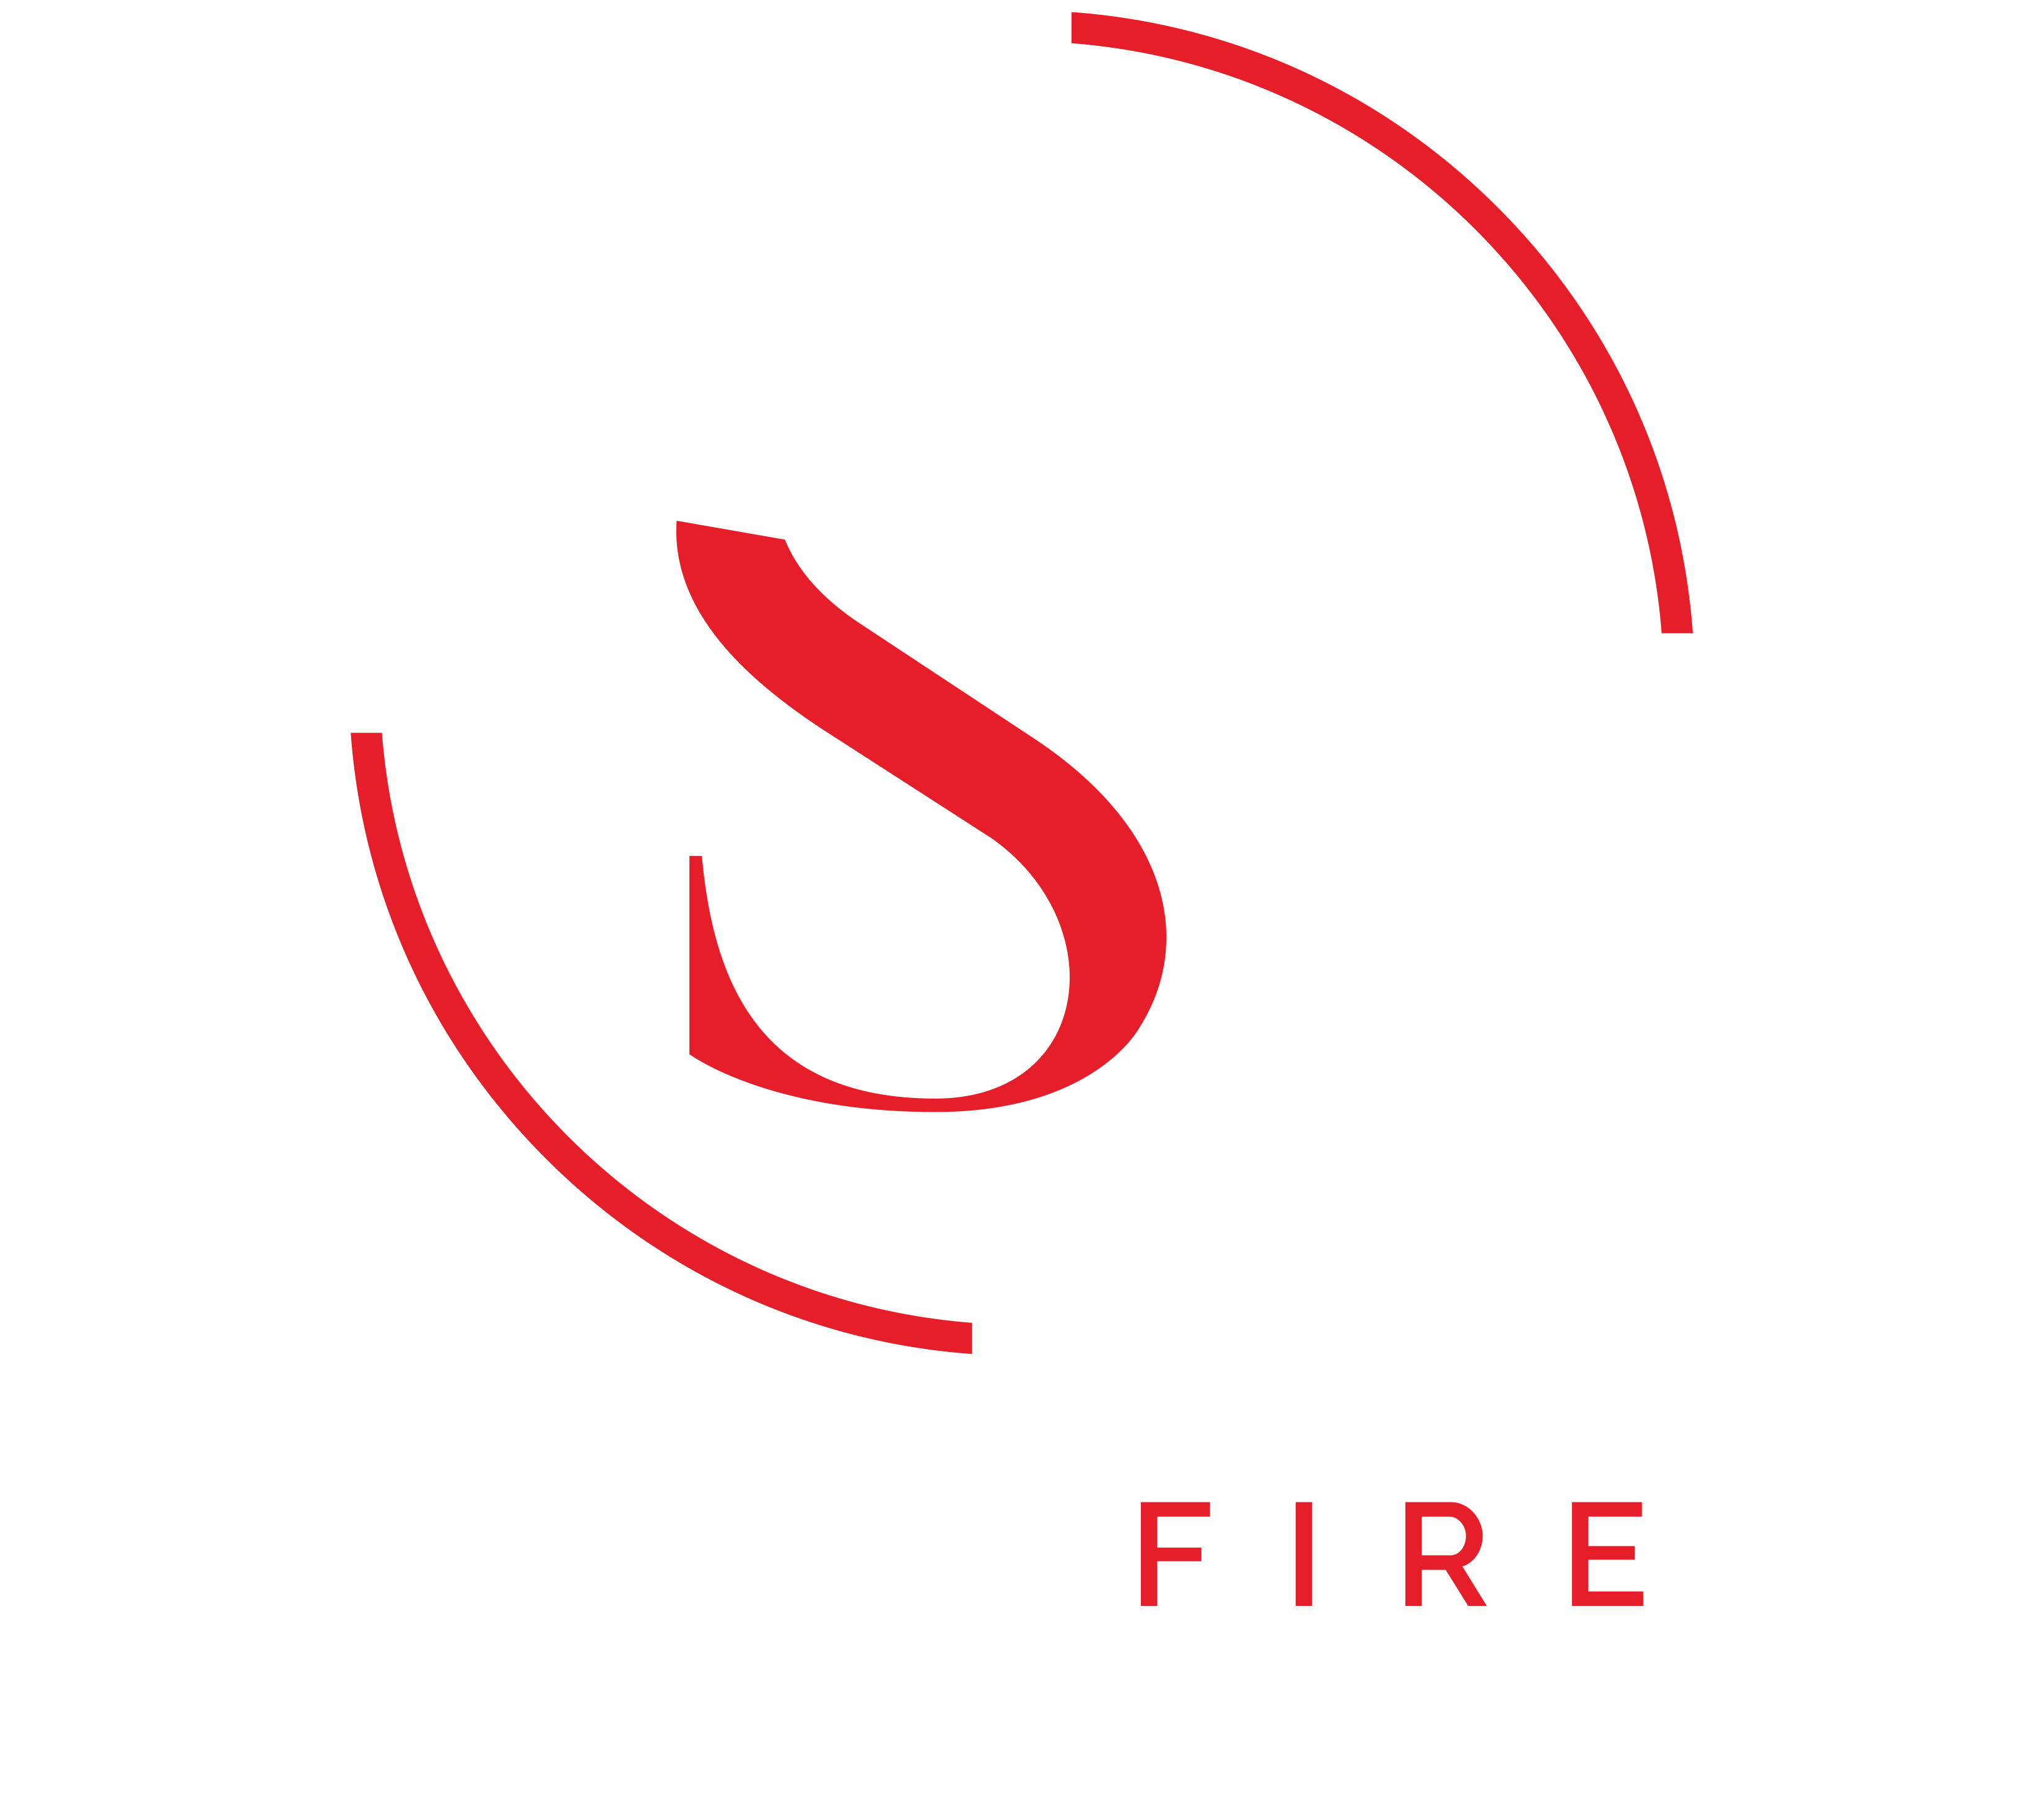 Sylk Fire Systems